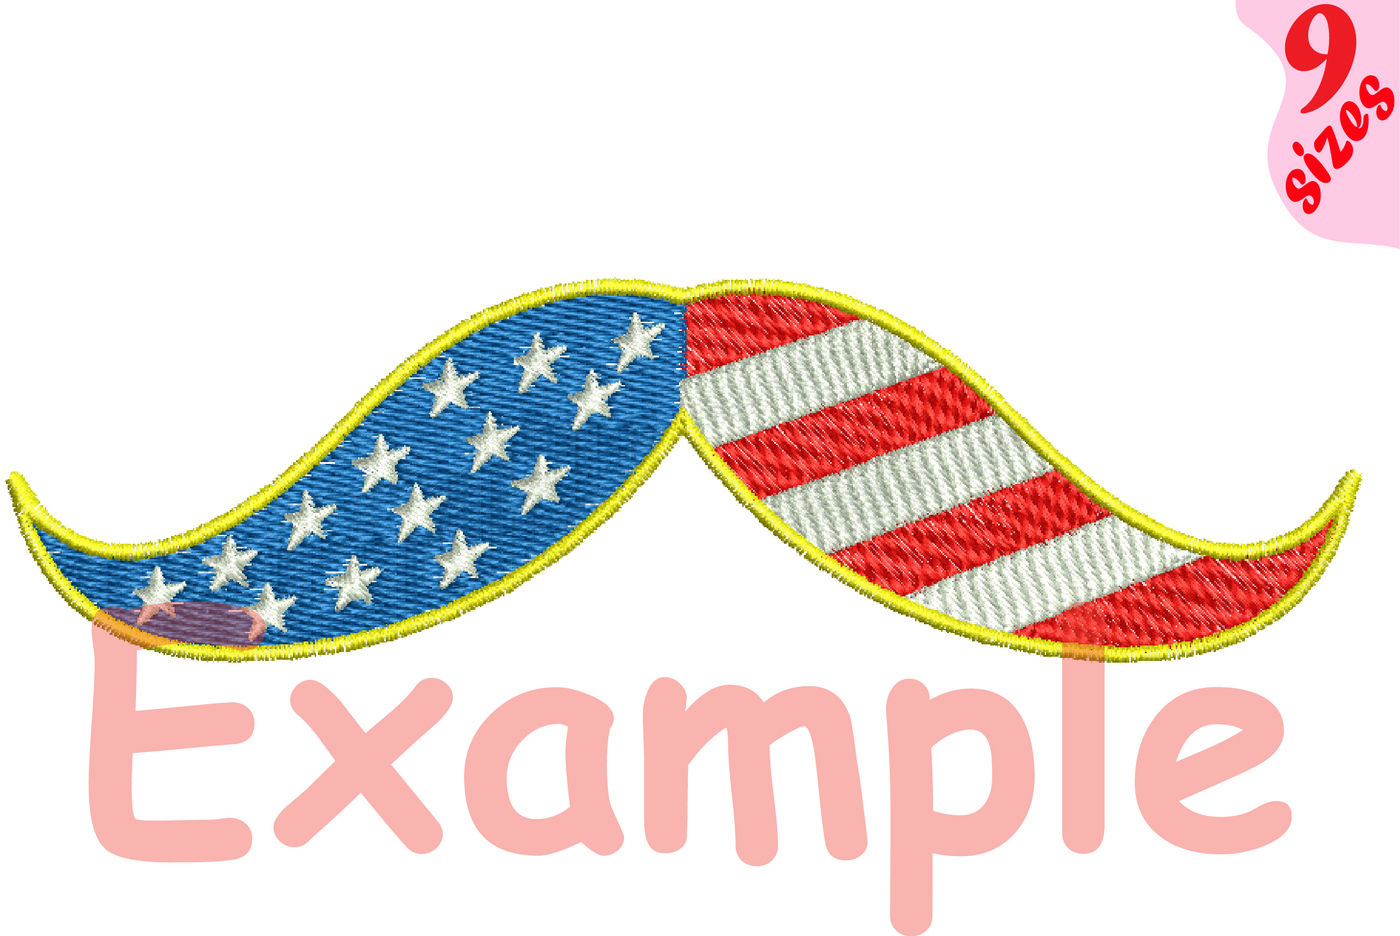 USA flag embroidery digital font.